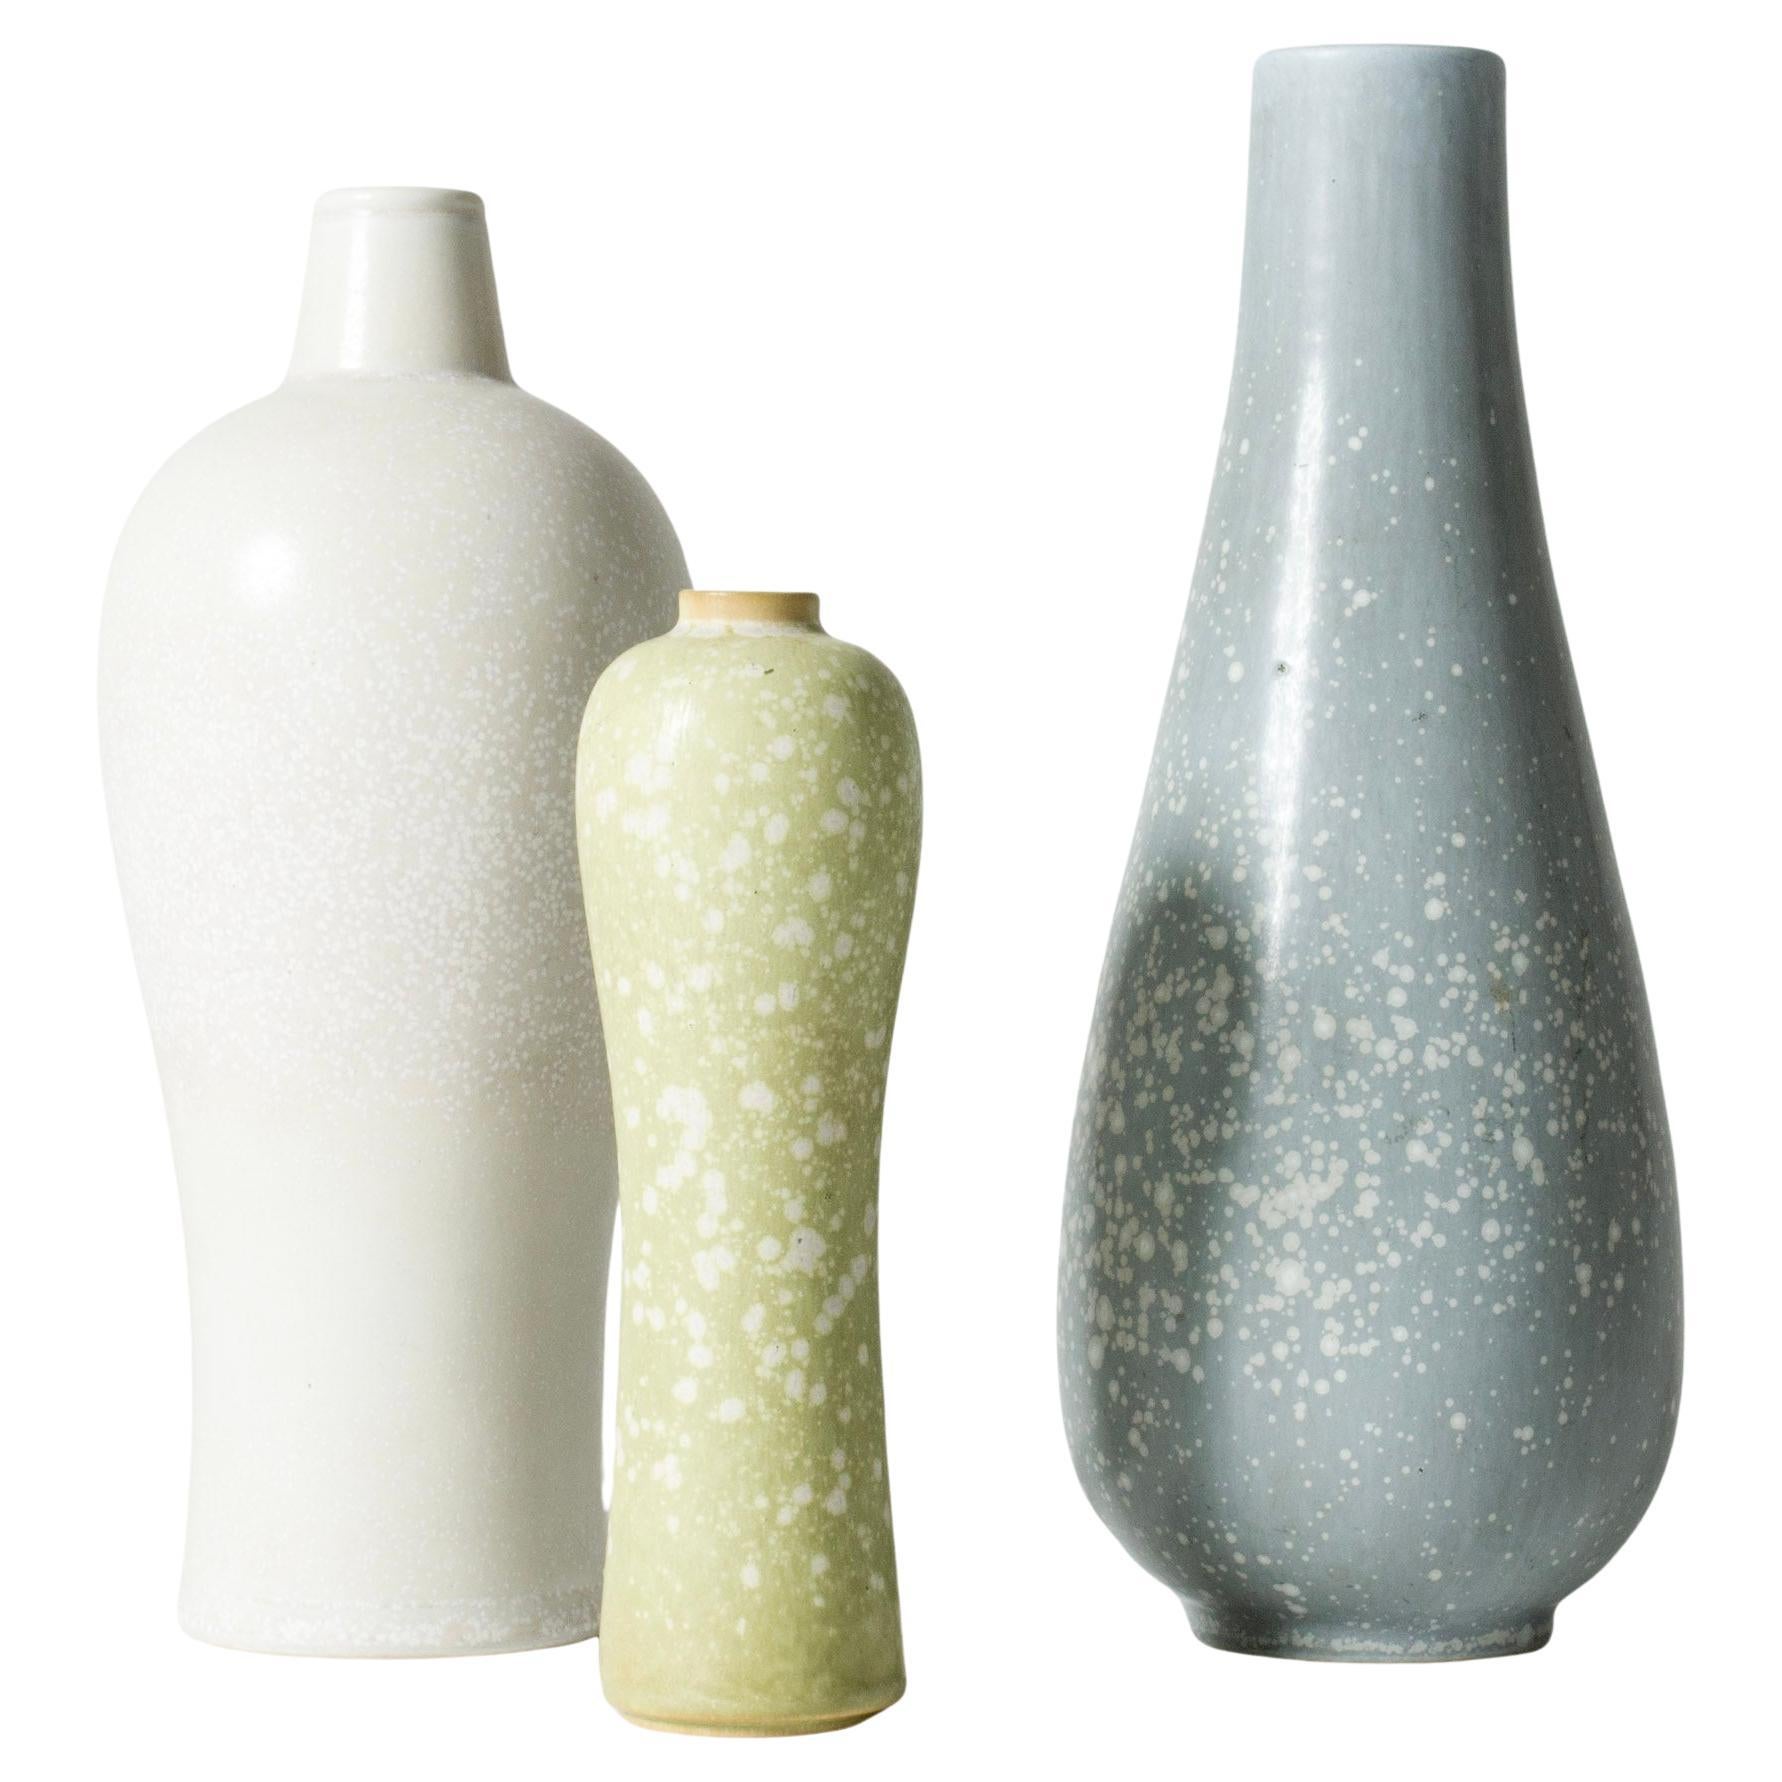 Three Modernist Stoneware Vases by Gunnar Nylund for Rörstrand, Sweden, 1940s